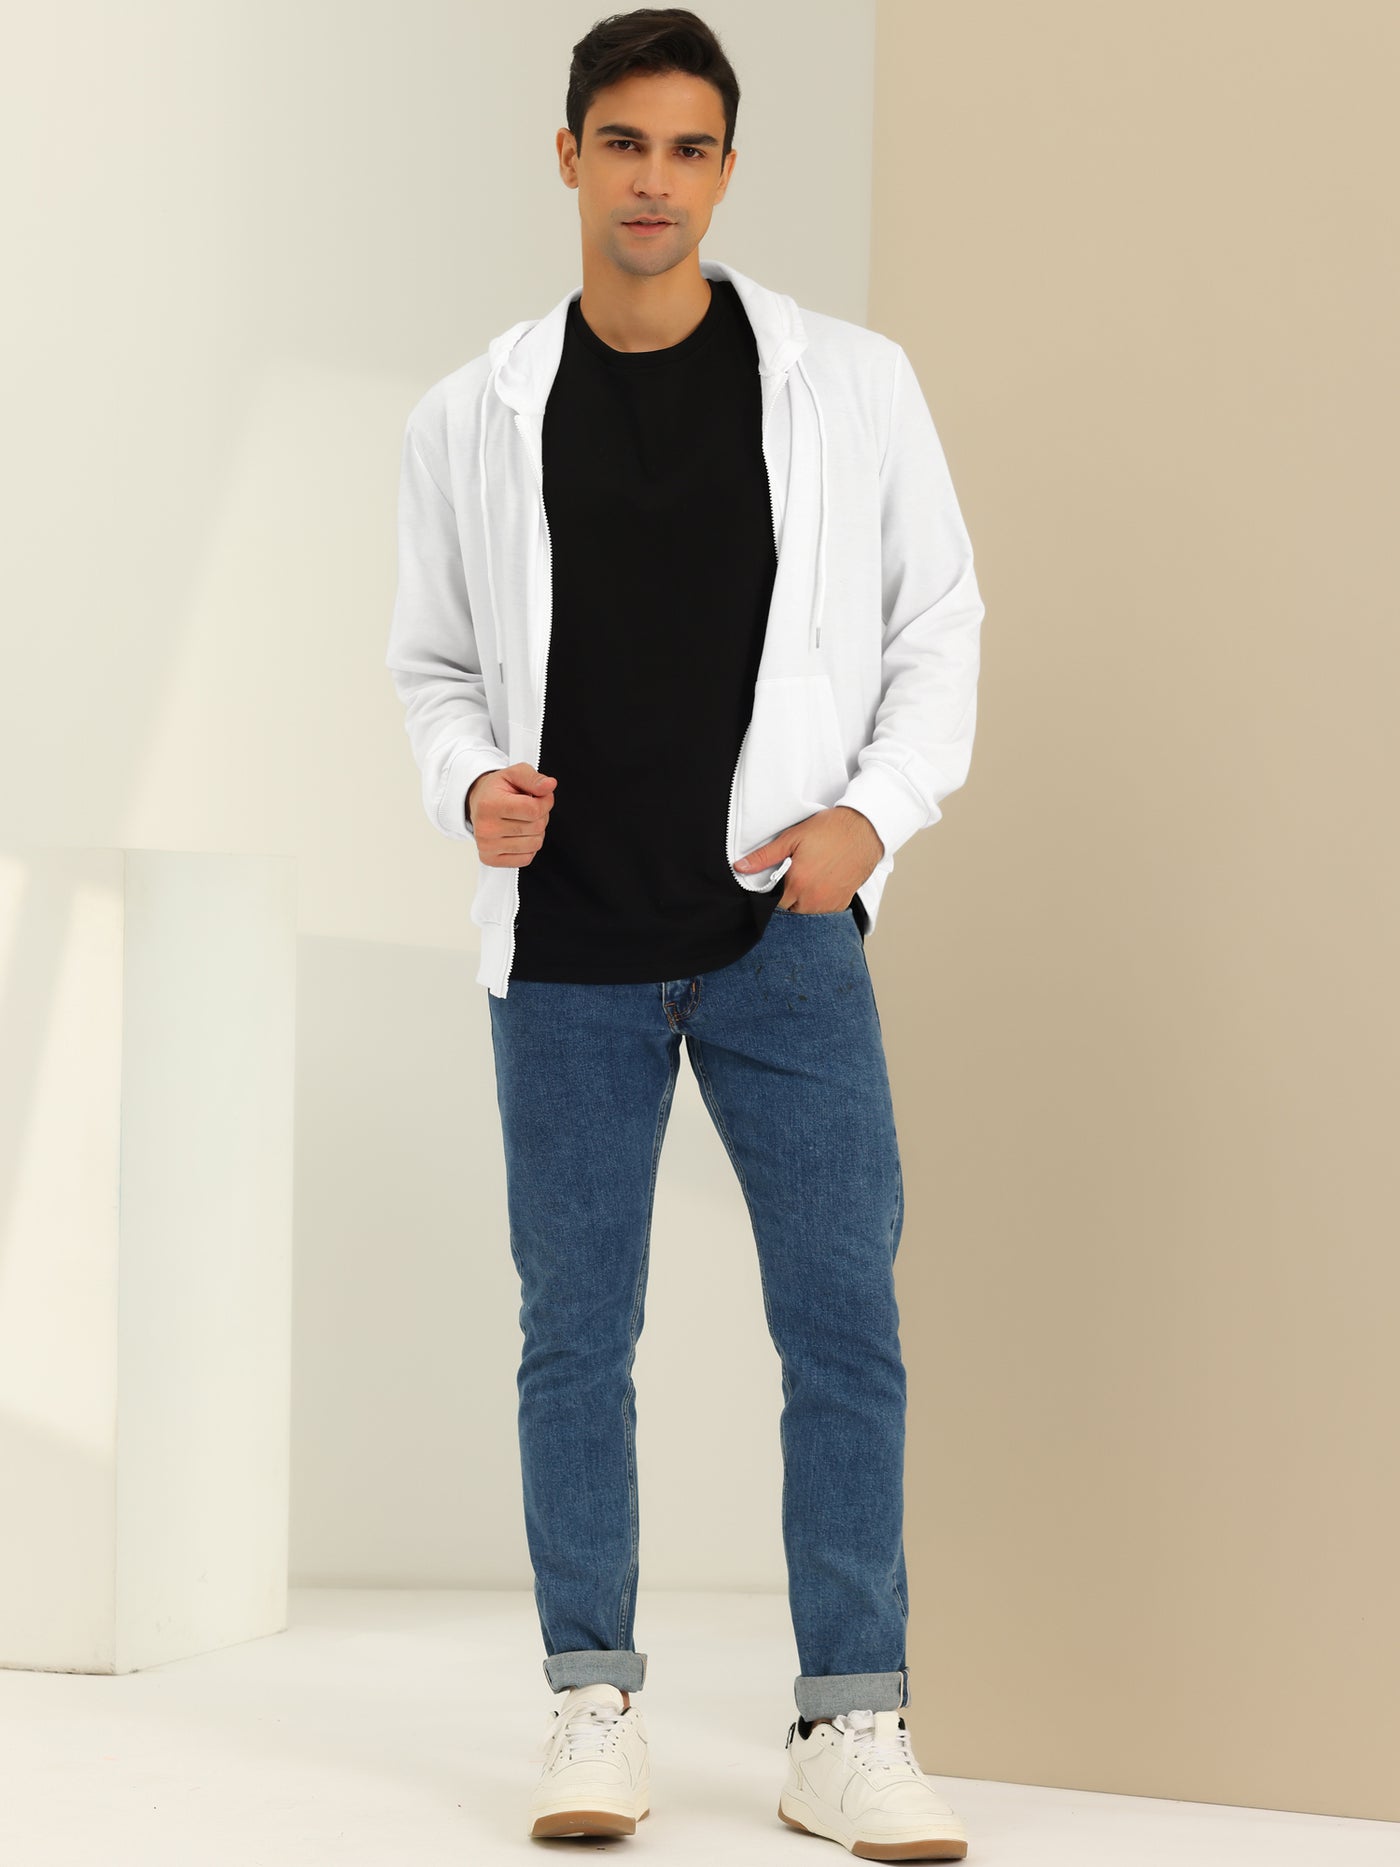 Bublédon Men's Hoodies Solid Color Zip Up Long Sleeves Knit Sweatshirt Jackets with Hood